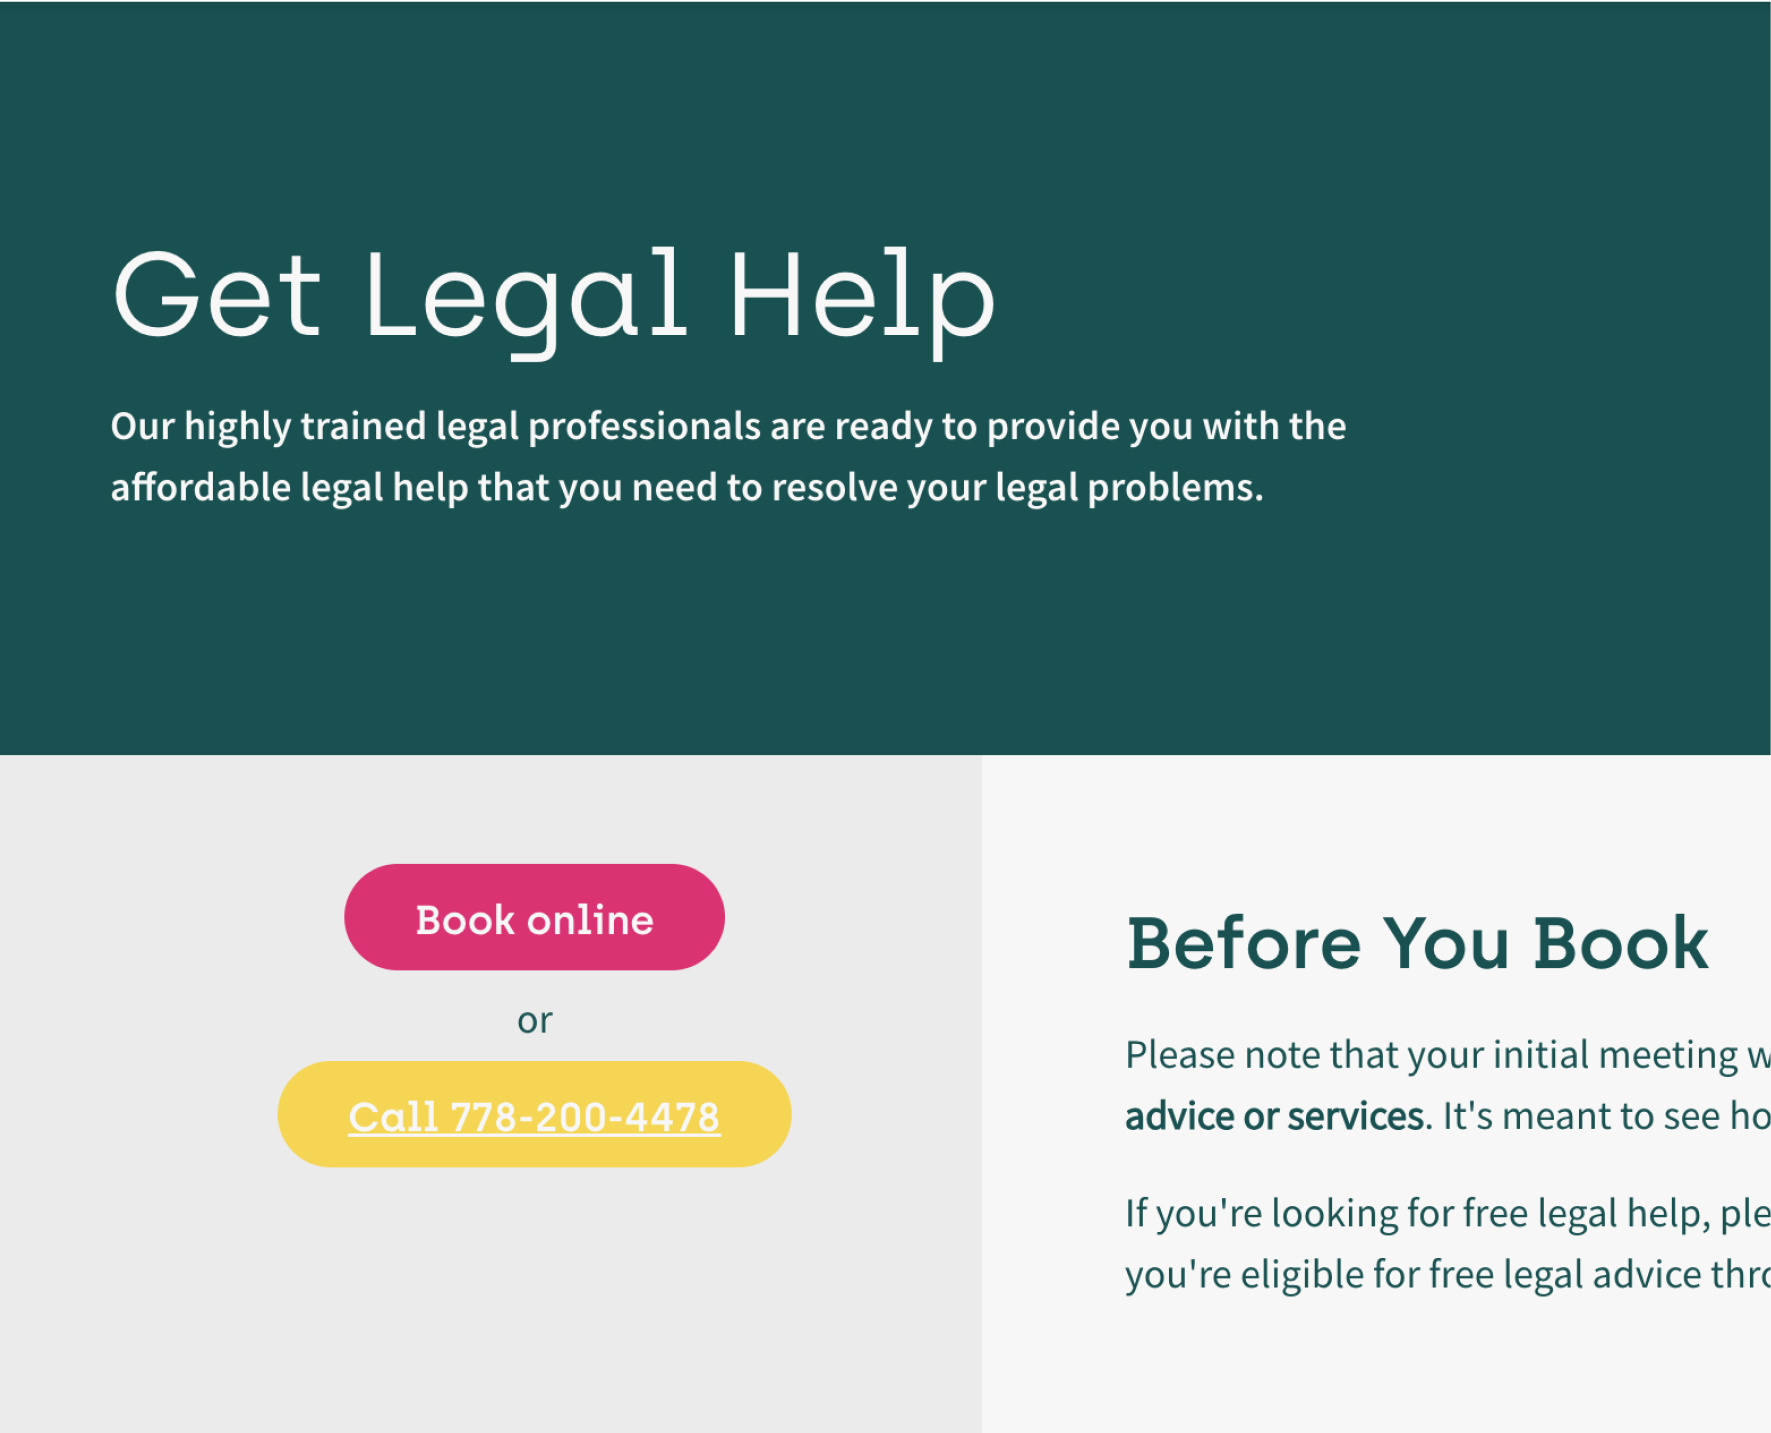 Get Legal Help detail screenshot of the web design